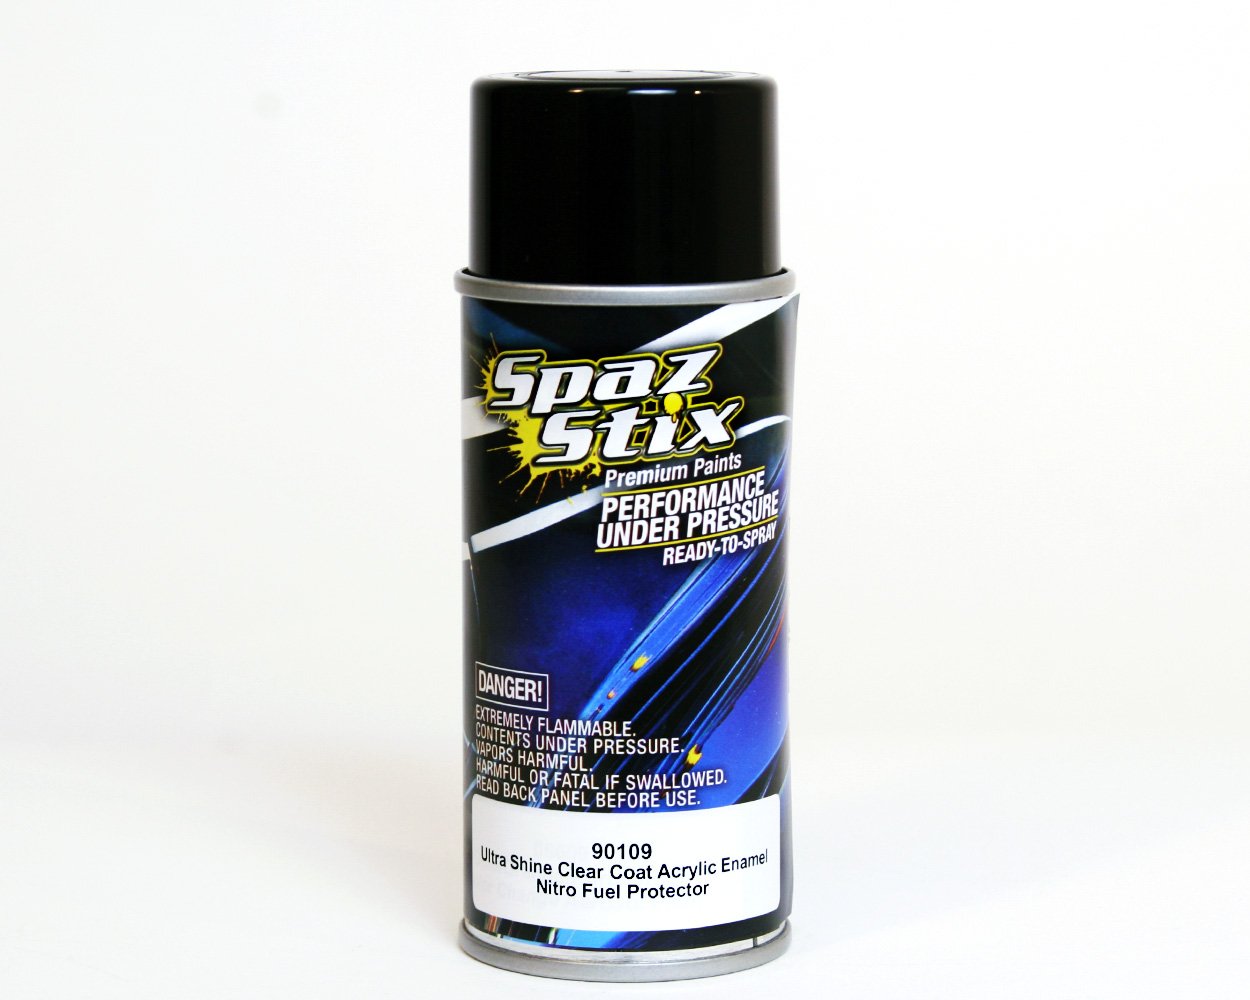 Ultra Shine Clear Acrylic Enamel Spray Paint